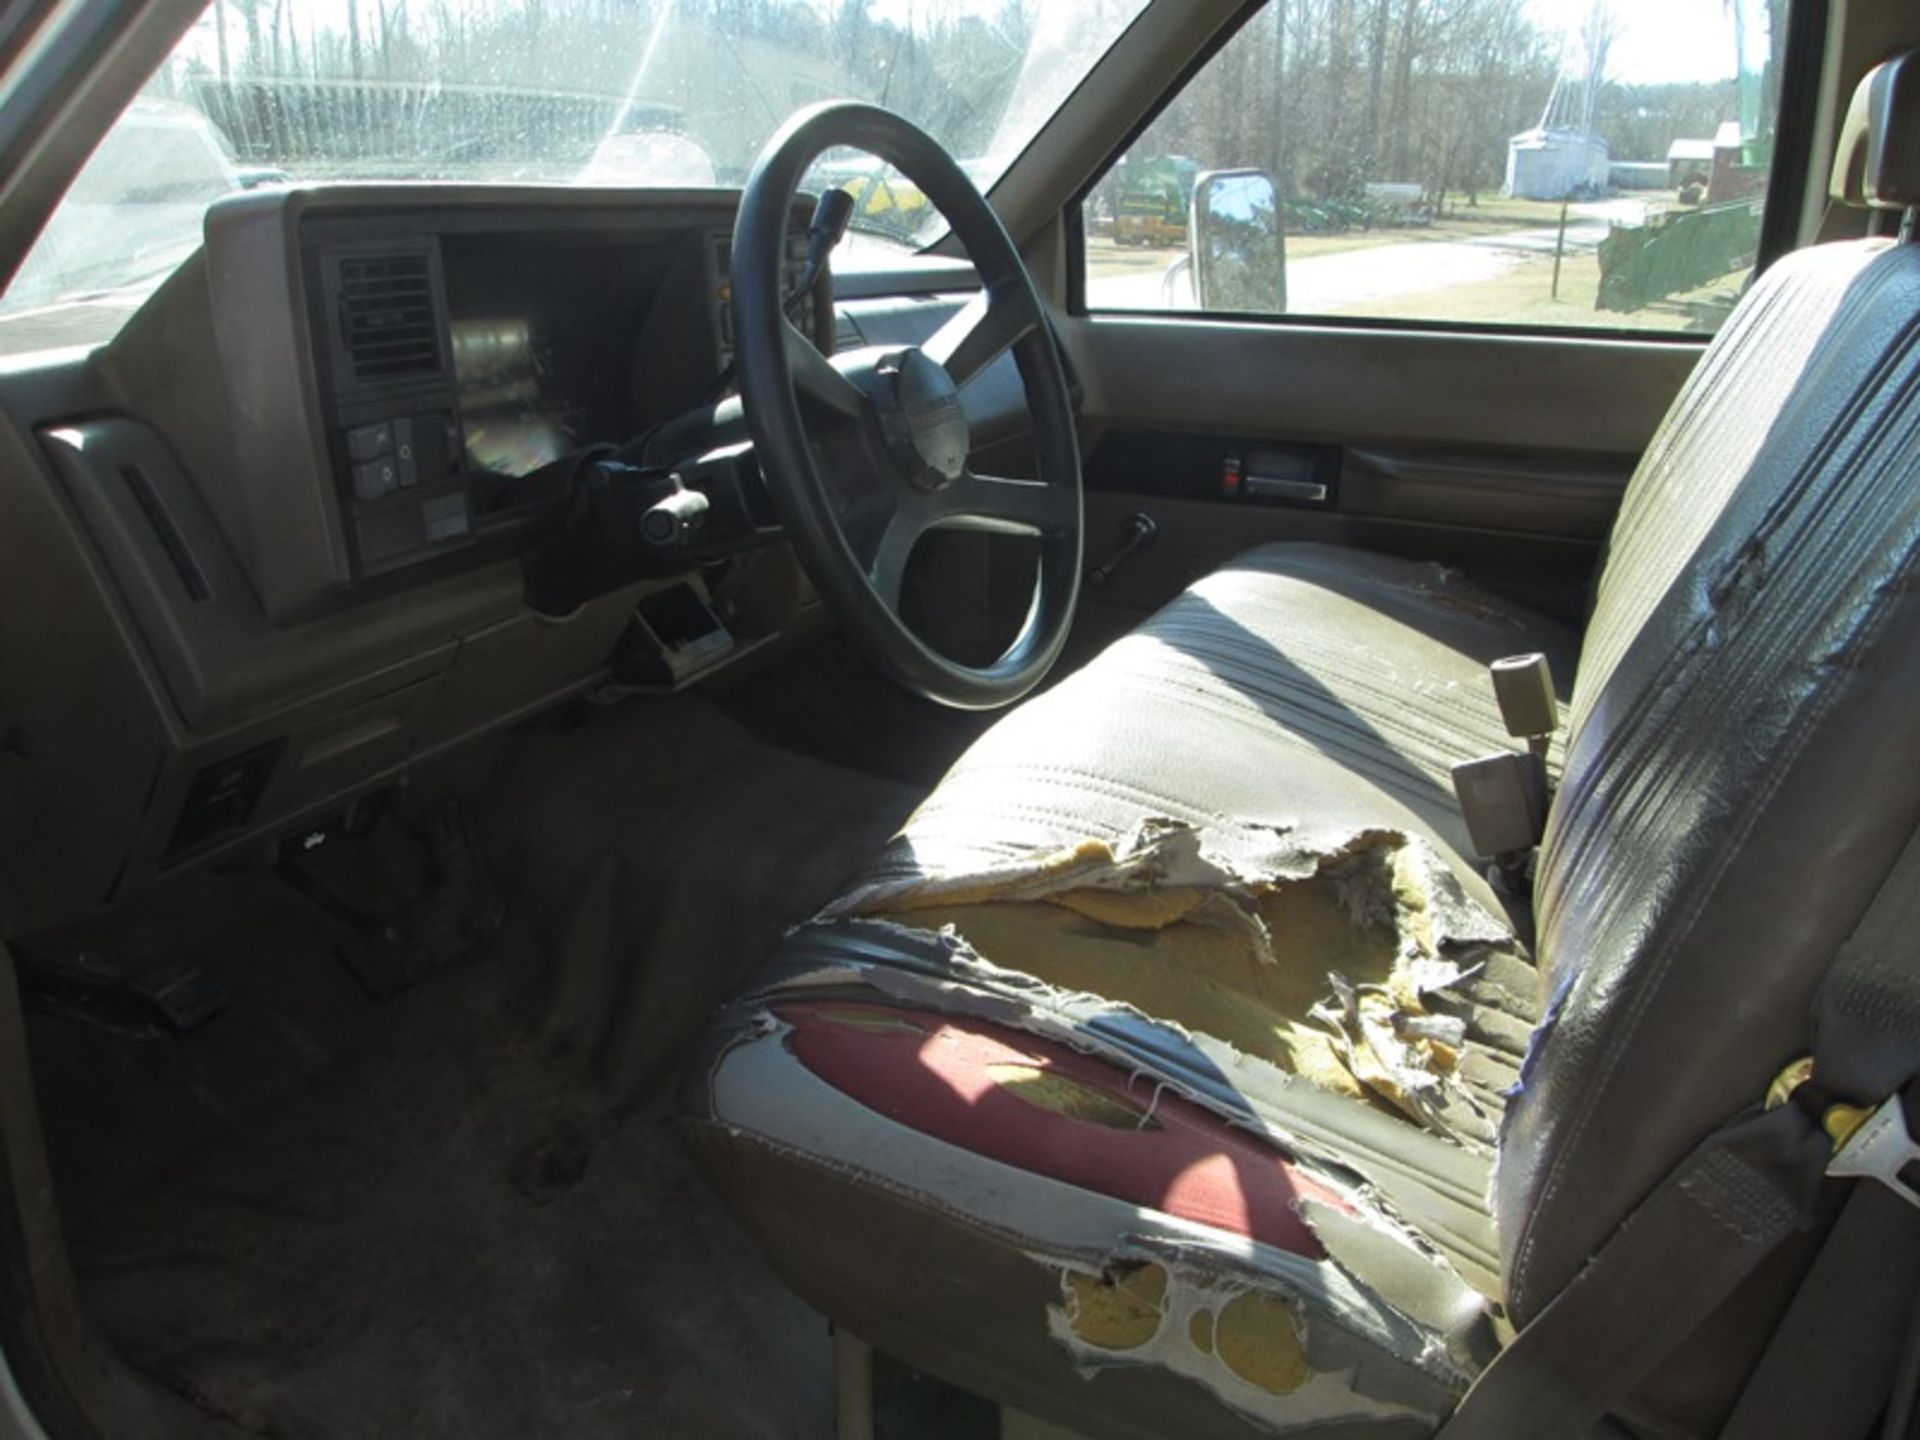 1994 Chevrolet 2500 service truck vin #1GBGC24K5REZ53929  153,988 miles - Image 4 of 5